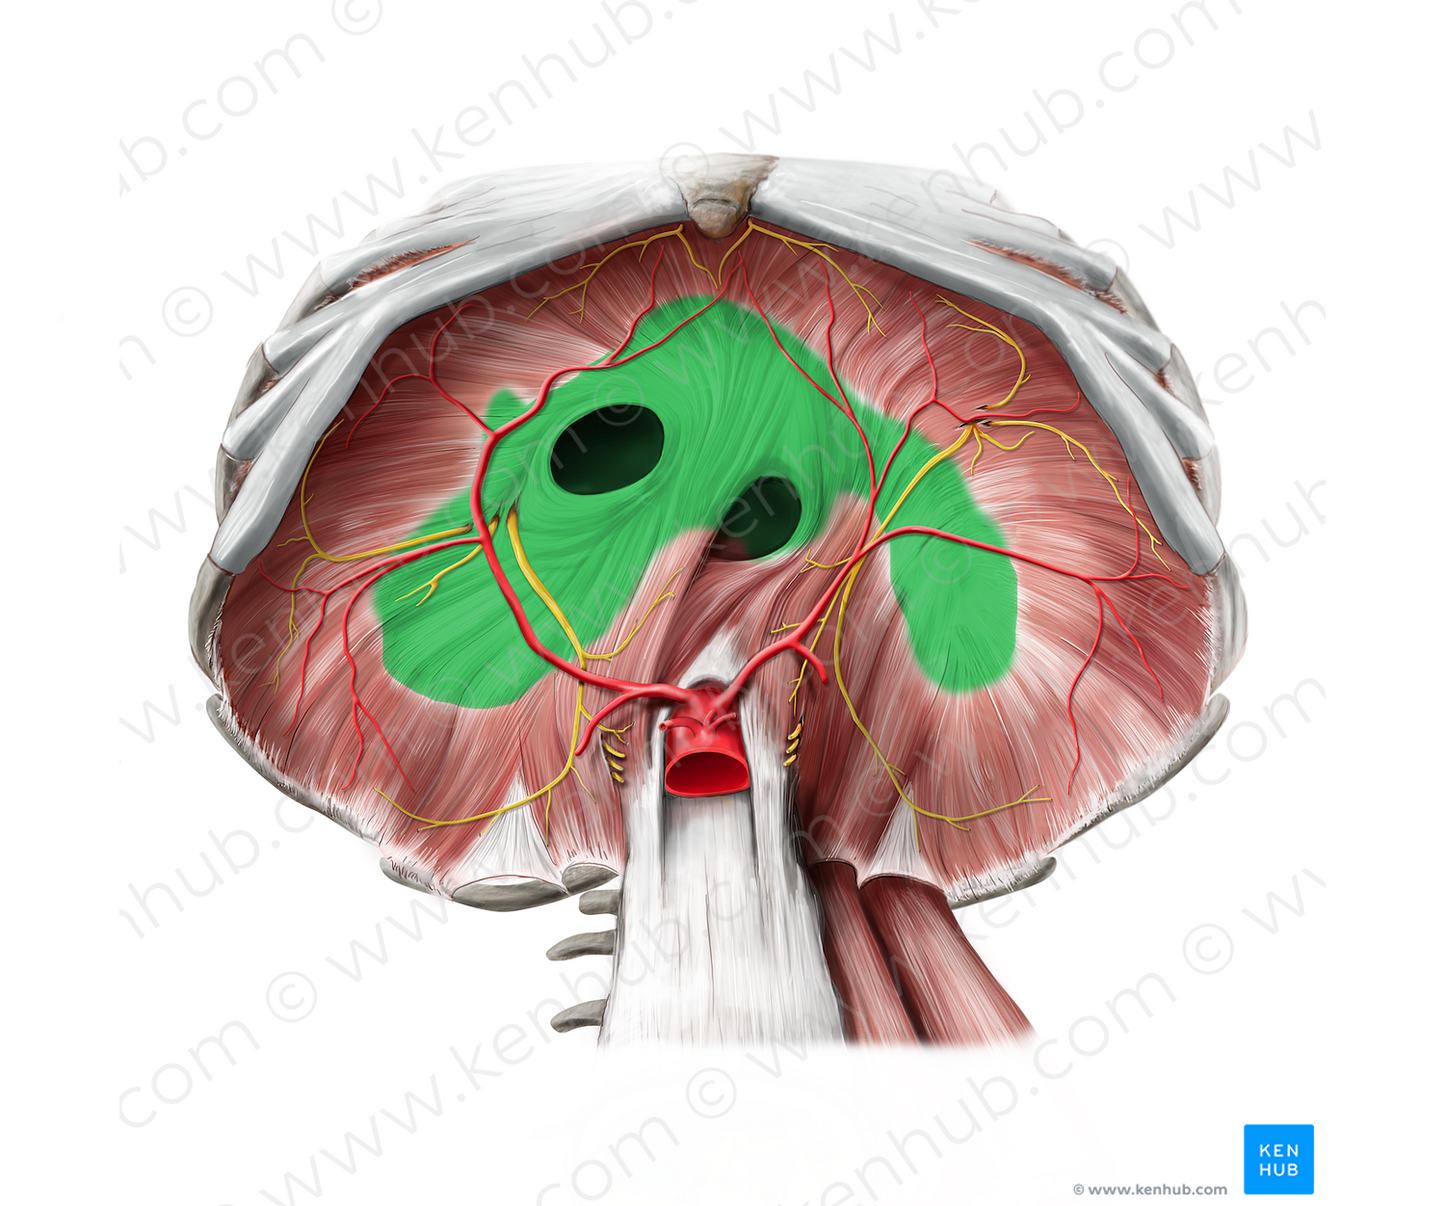 Central tendon of diaphragm (#2555)